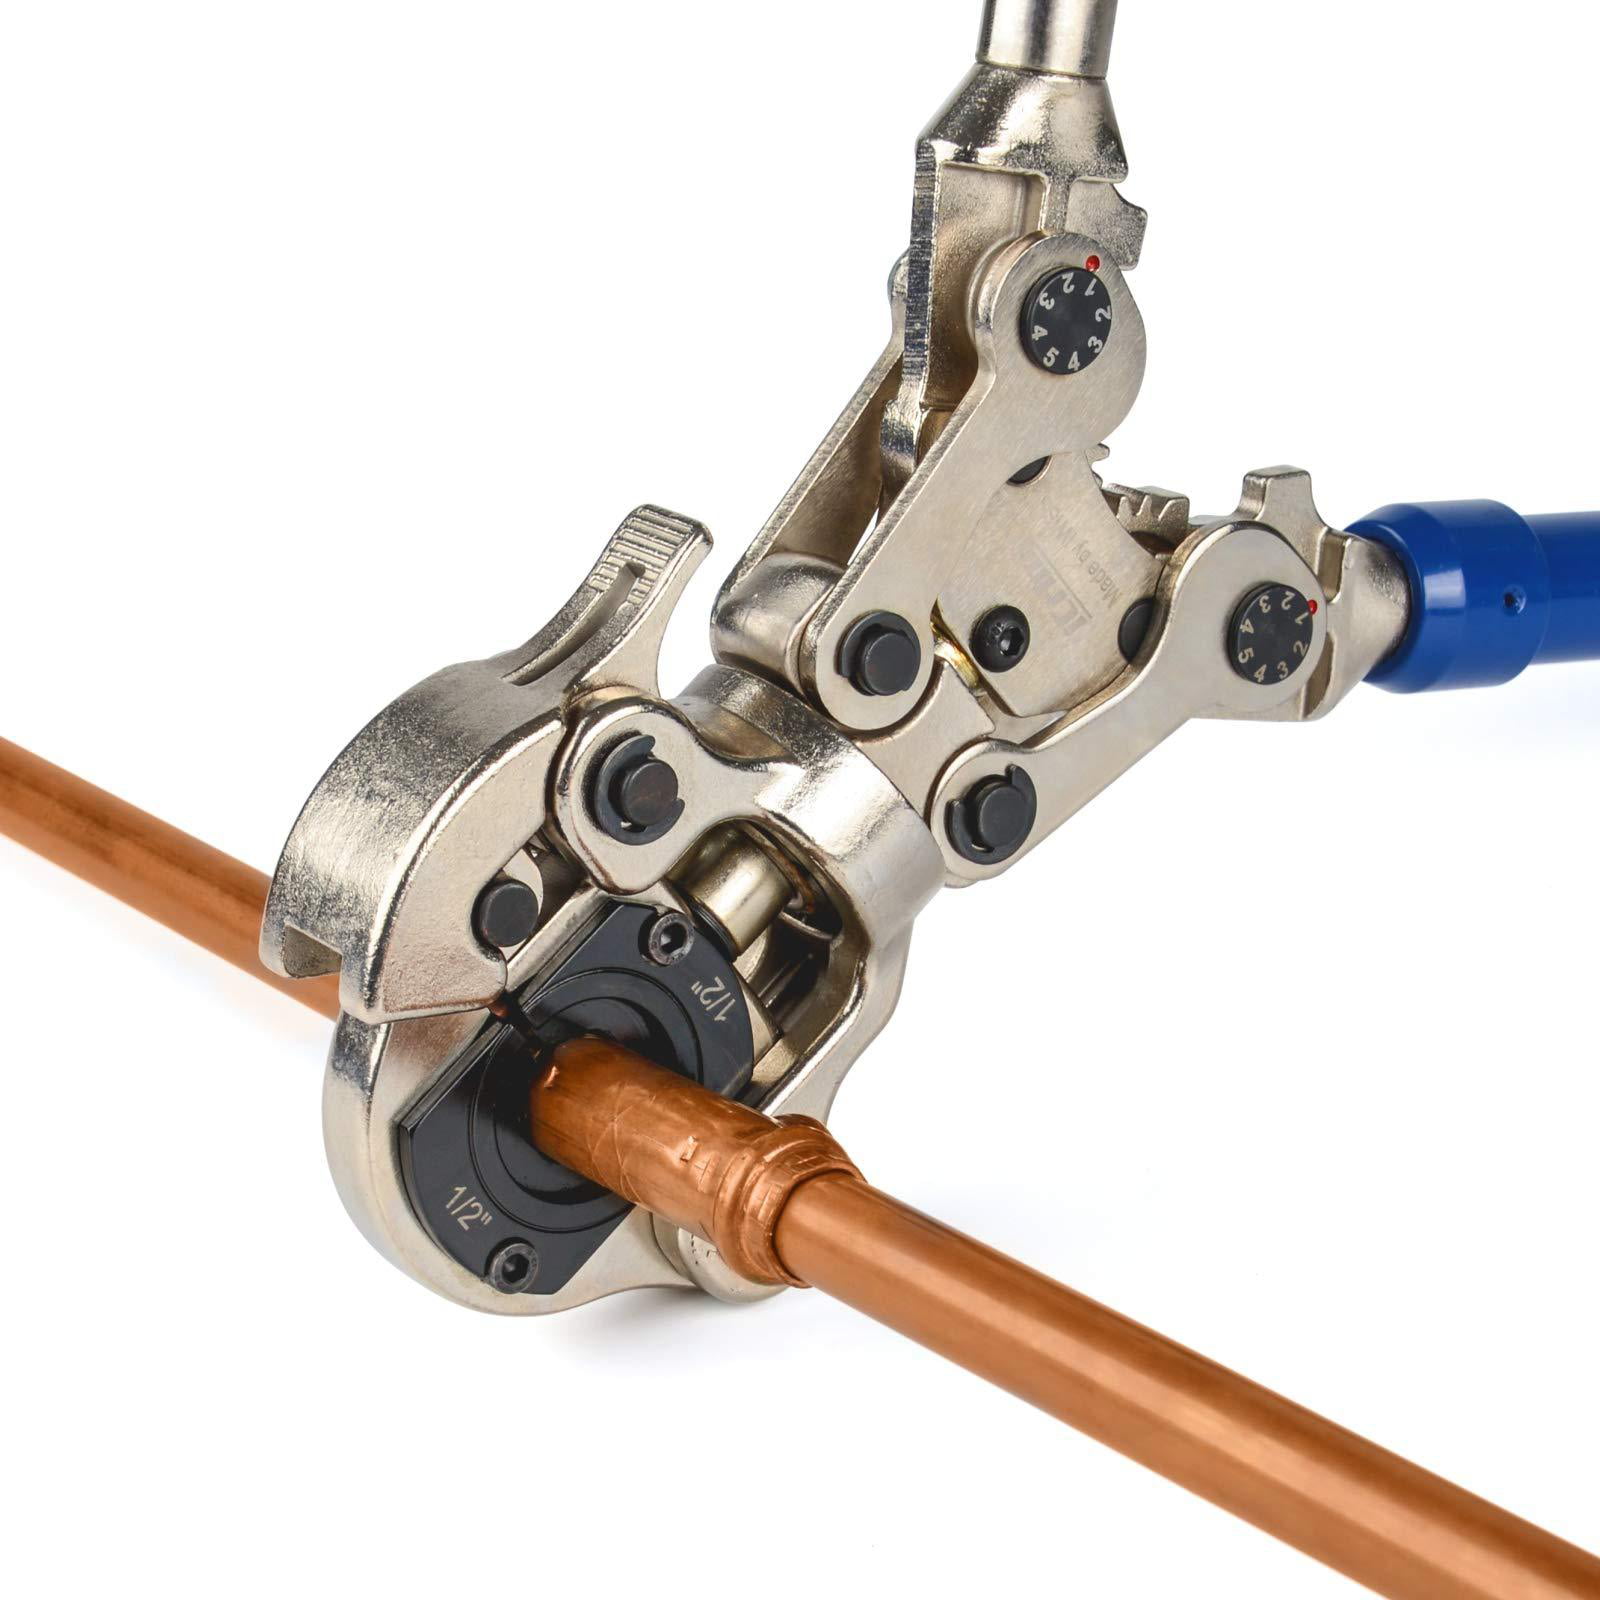 CW-1632Af Copper Range 1/2" & 1" 3/4" Copper Pipe Press &Pex Crimp Plumbing Tool 